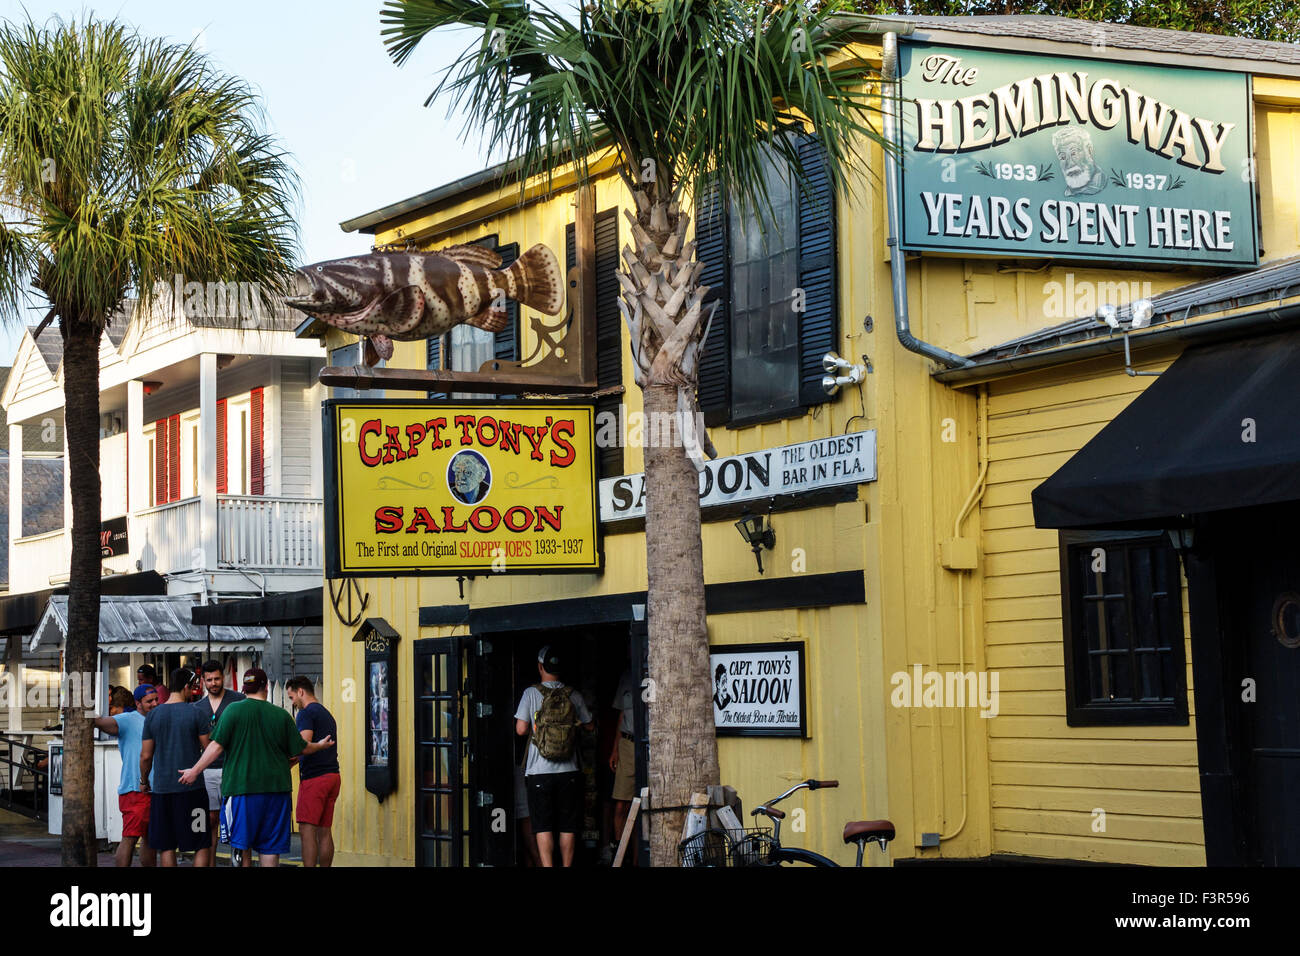 Florida,Key West,Keys,Greene Street,Capt. Captain Tony's Saloon,original Sloppy Joe's,bar lounge pub,front,entrance,FL150509068 Stock Photo